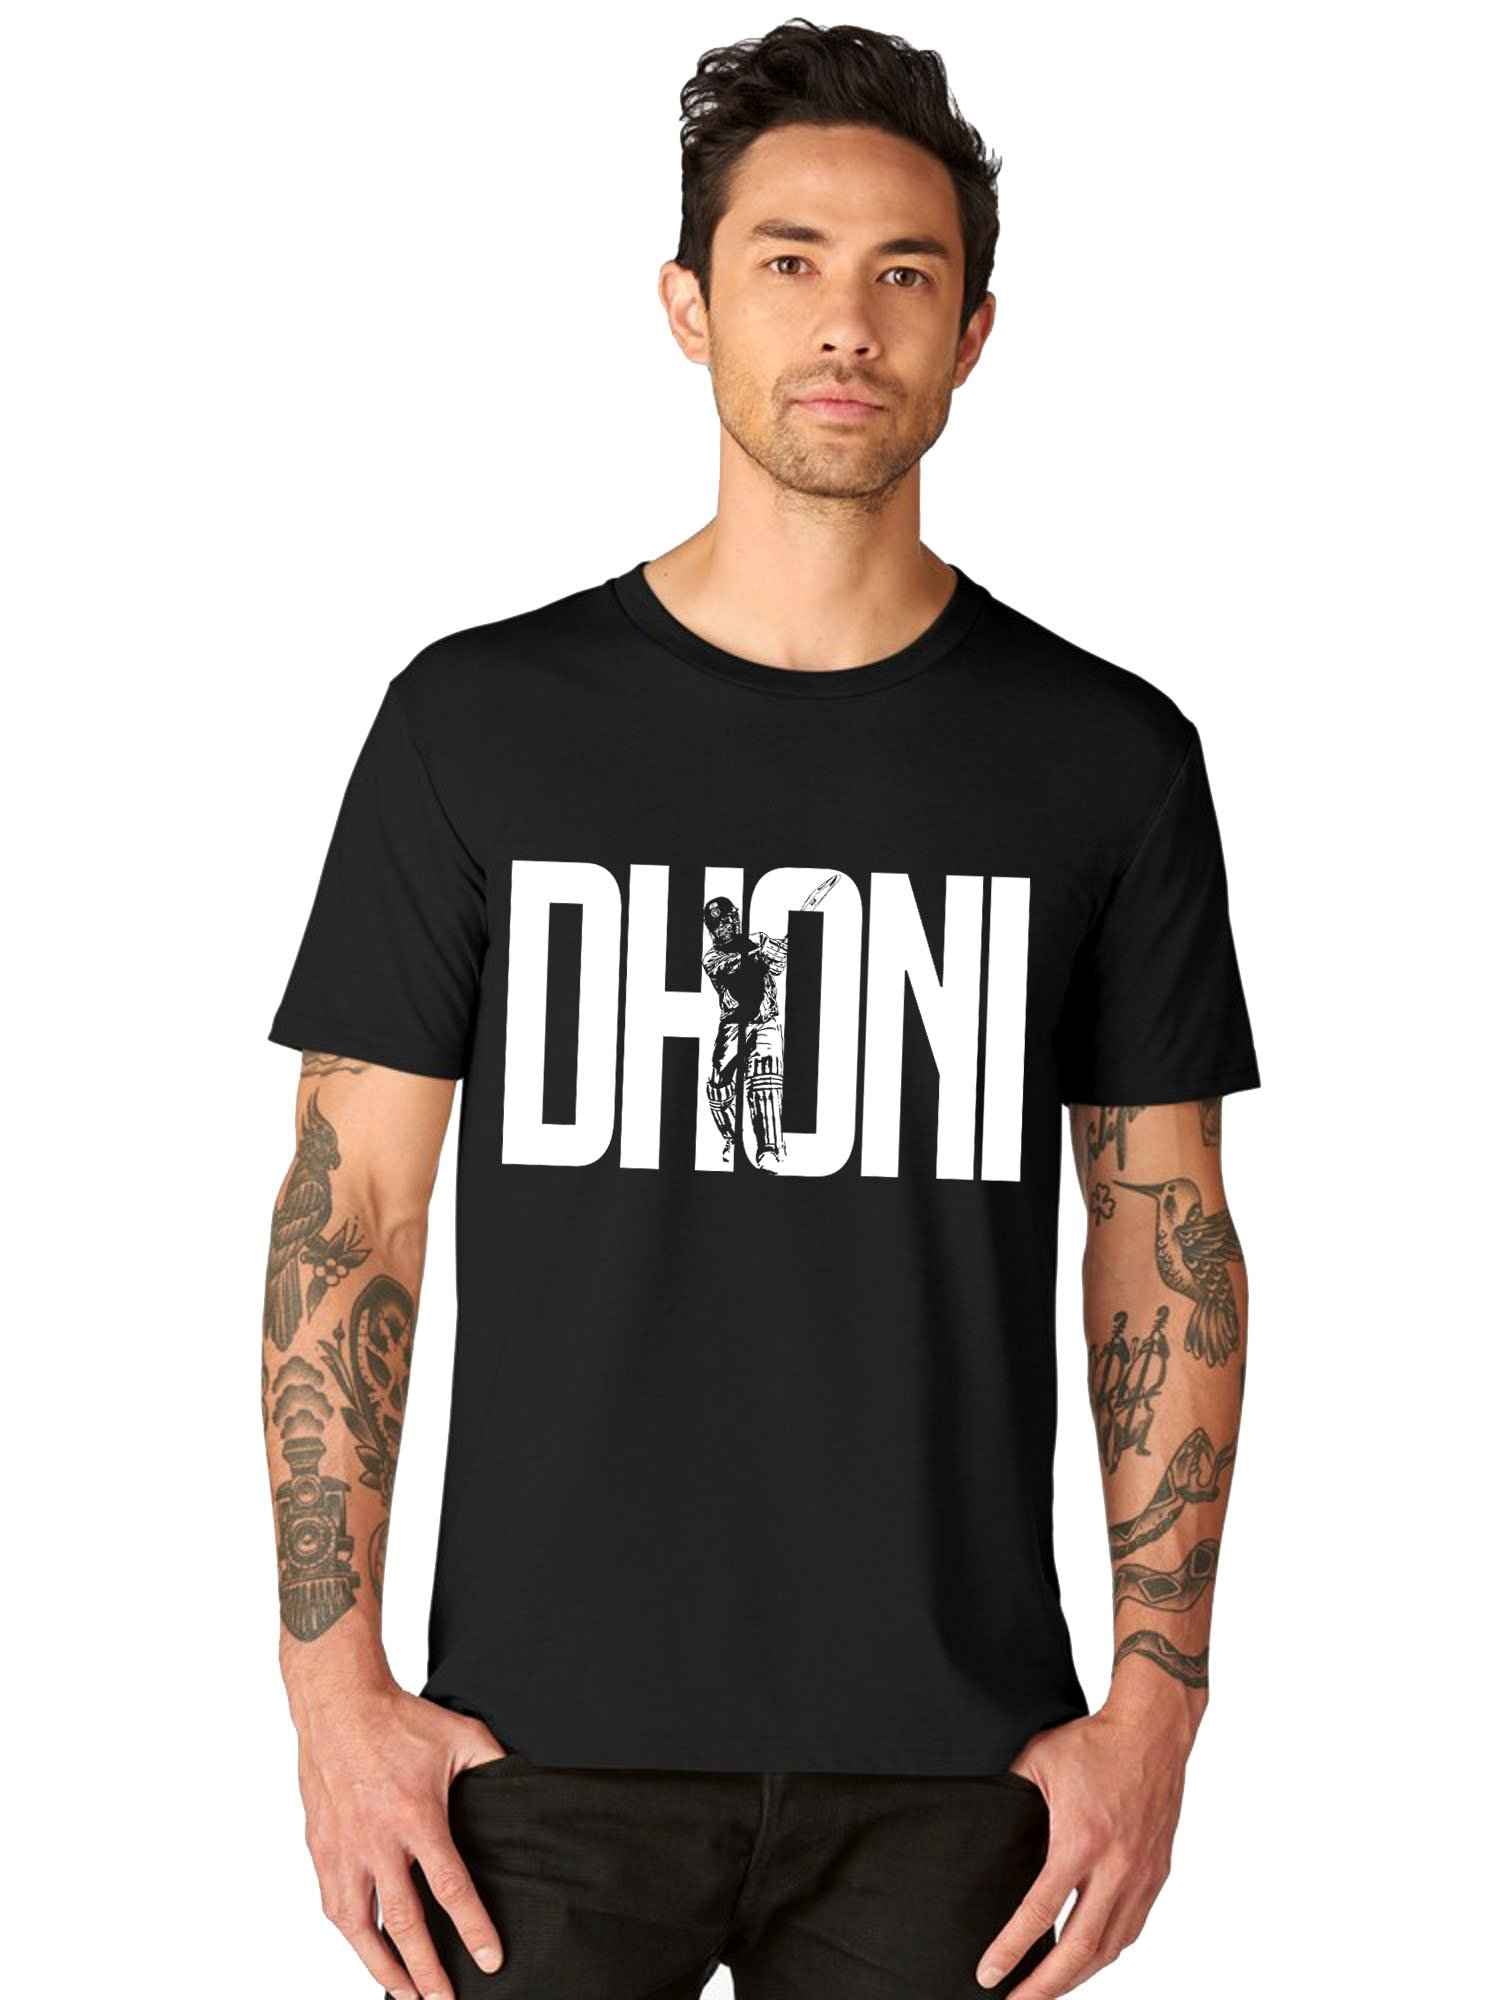 dhoni printed t shirt